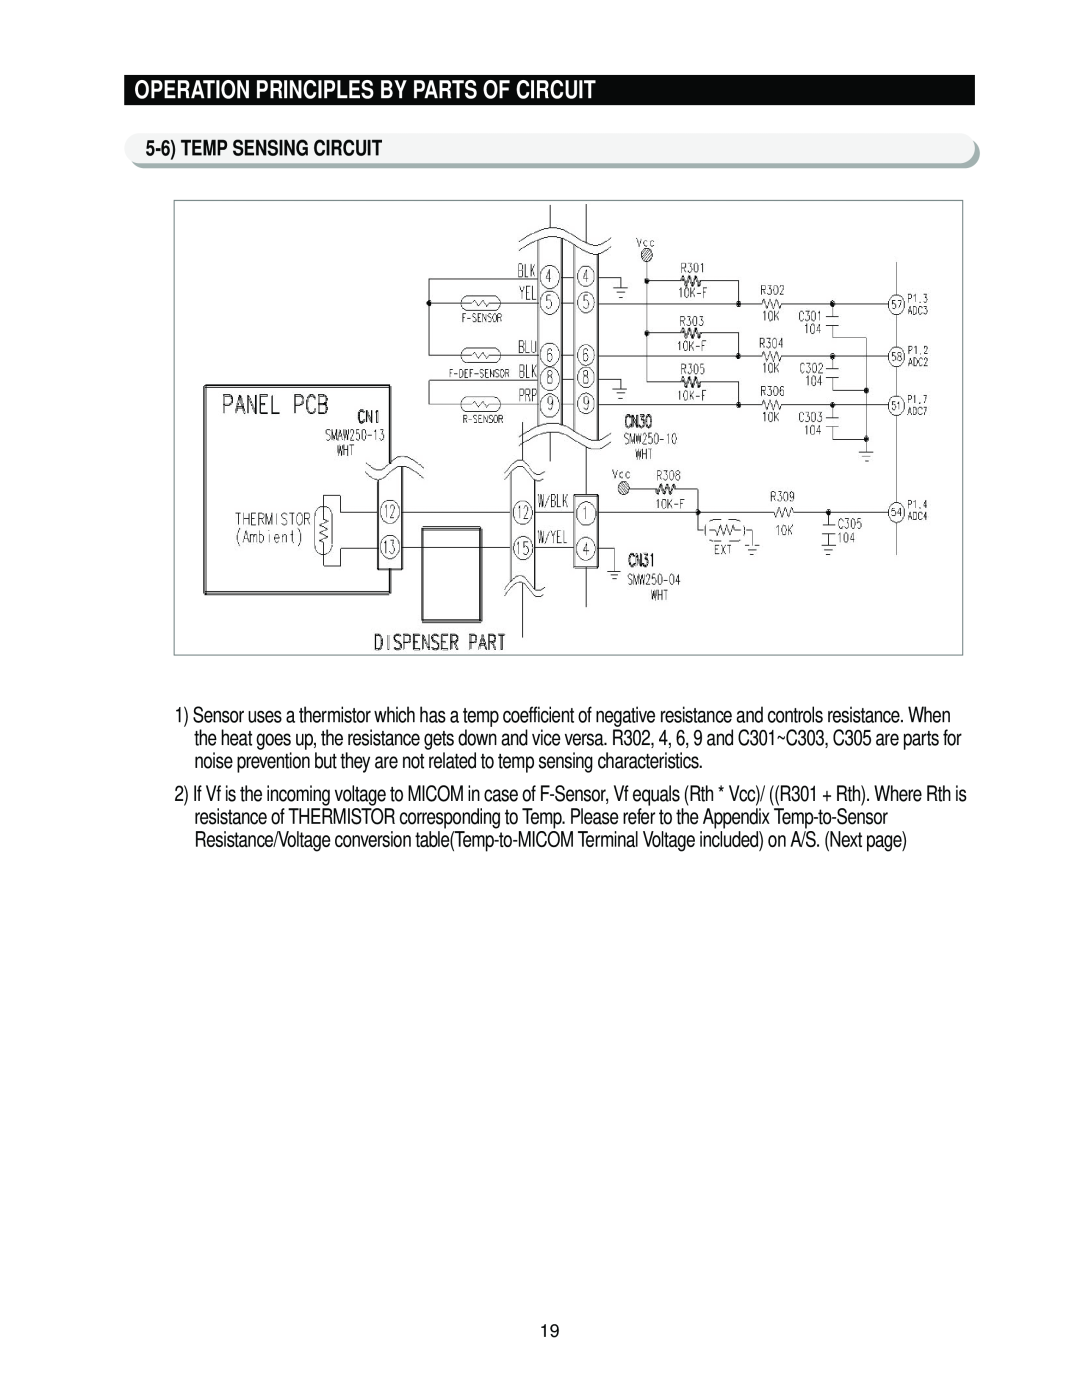 Samsung RS2*3* manual 5-6TEMP SENSING CIRCUIT, Operation Principles By Parts Of Circuit 